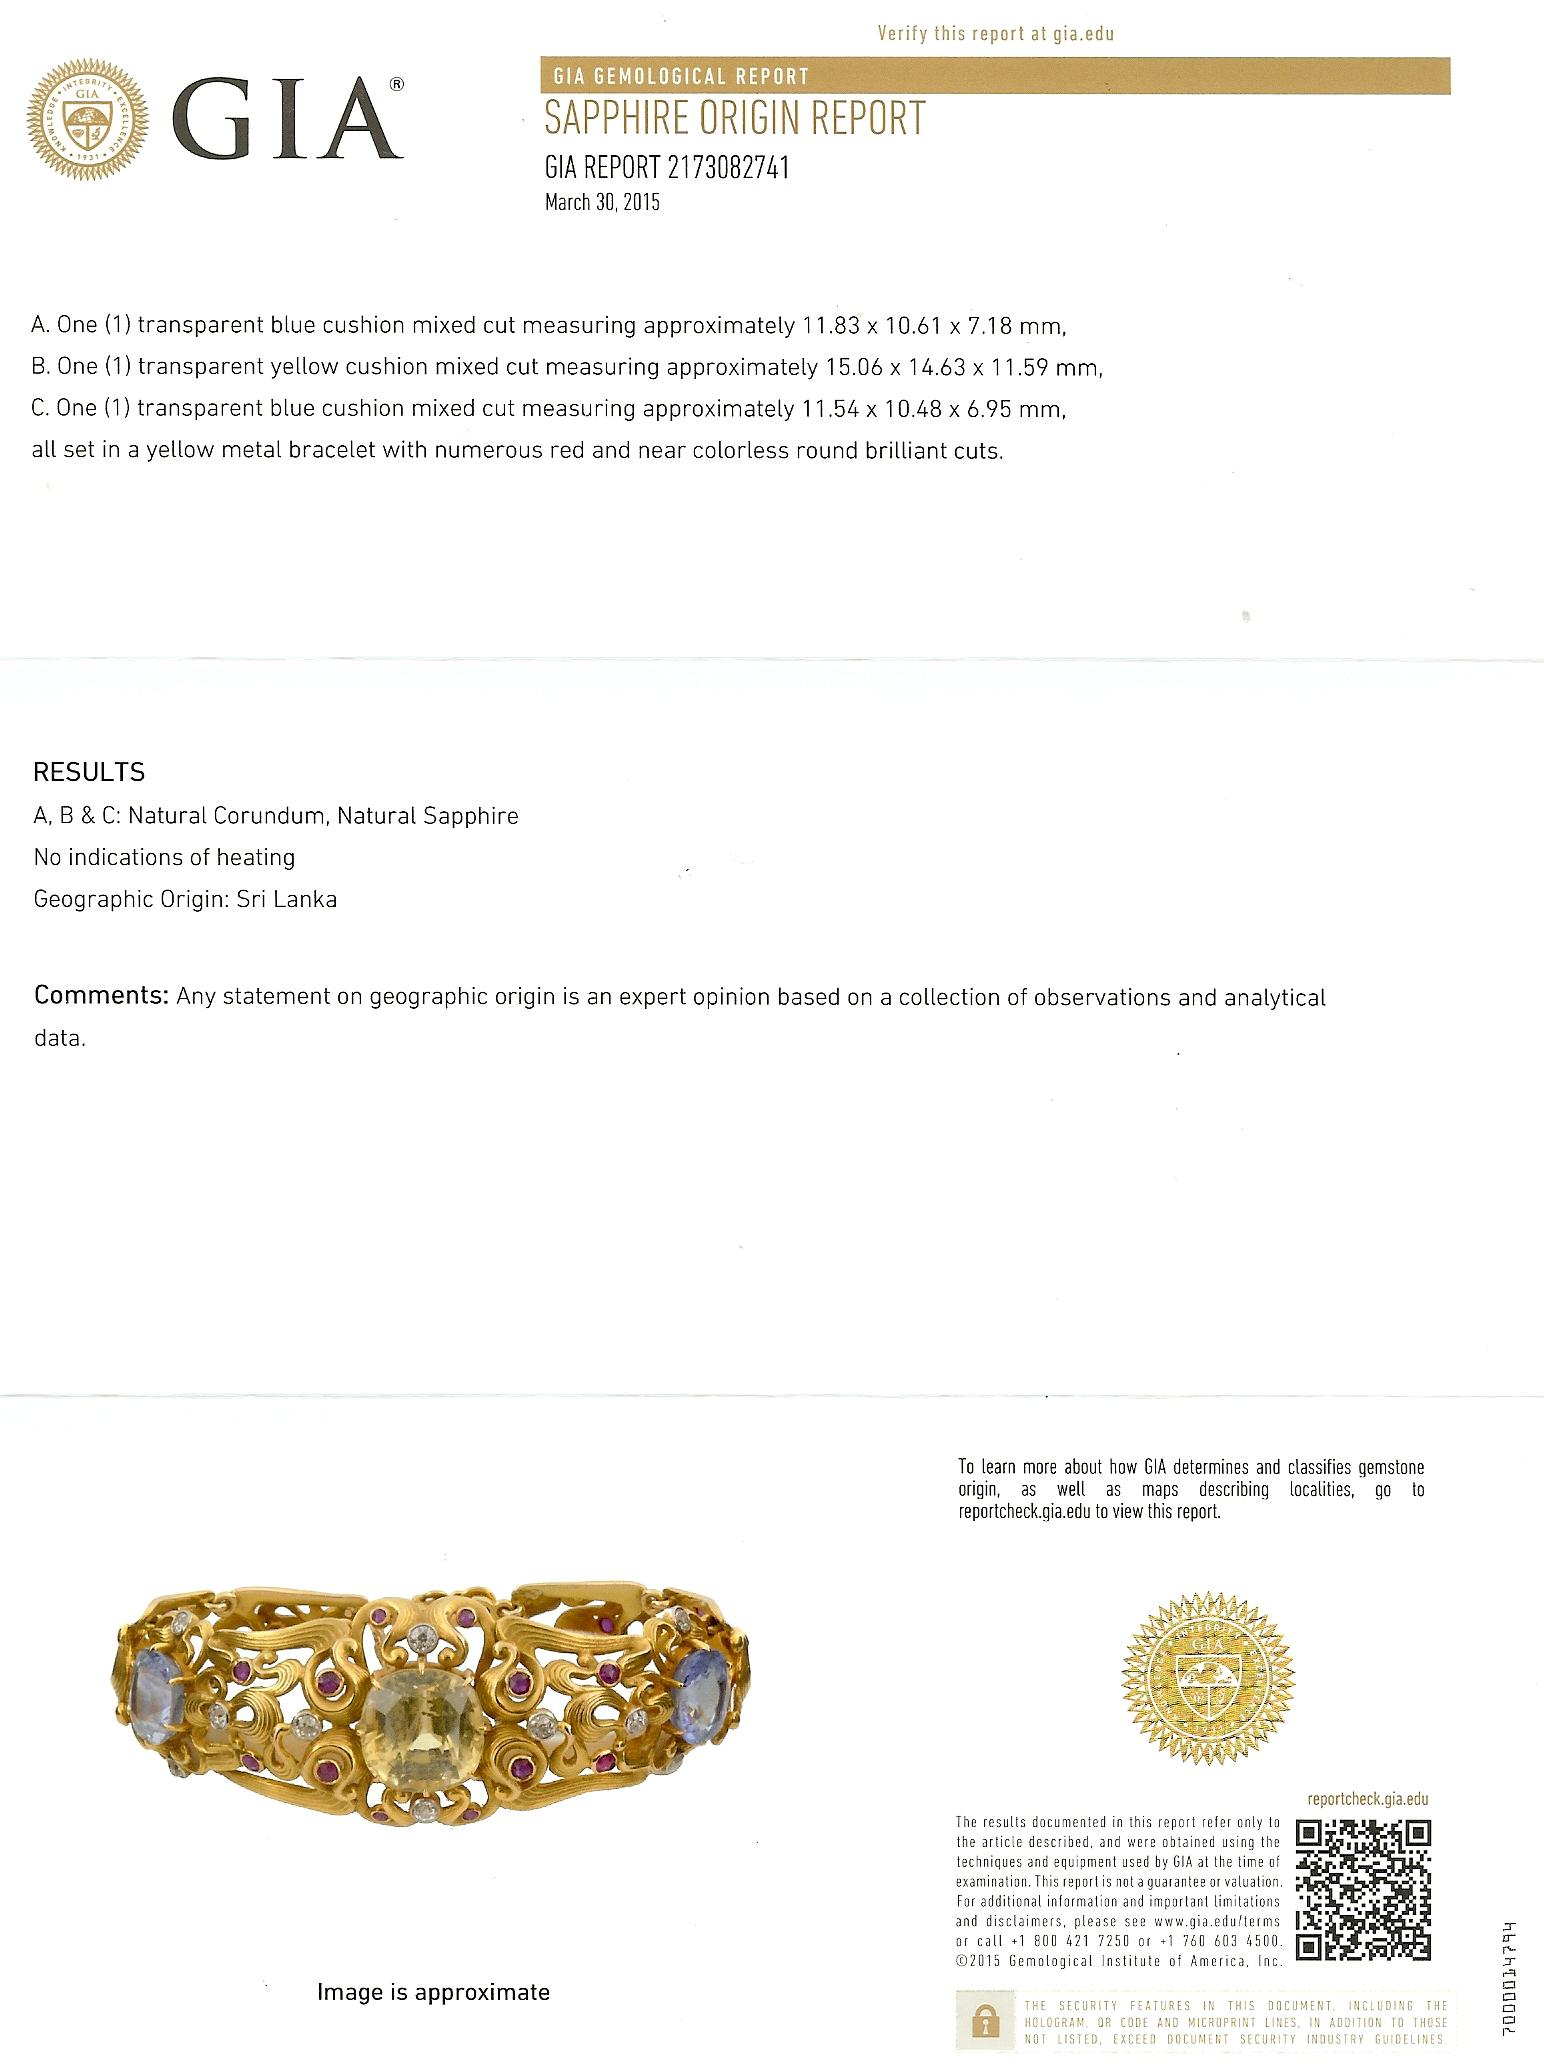 Diese 14 Karat Gold Georgian Style Sapphire Armband verfügt über drei Schwerpunkt GIA zertifiziert Sri Lanka abgebaut Cushion cut Sapphires - 1 zentrale 15 Karat Canary Yellow Sapphire & 2 Surrounding traditionellen Ceylon Sapphires insgesamt 14